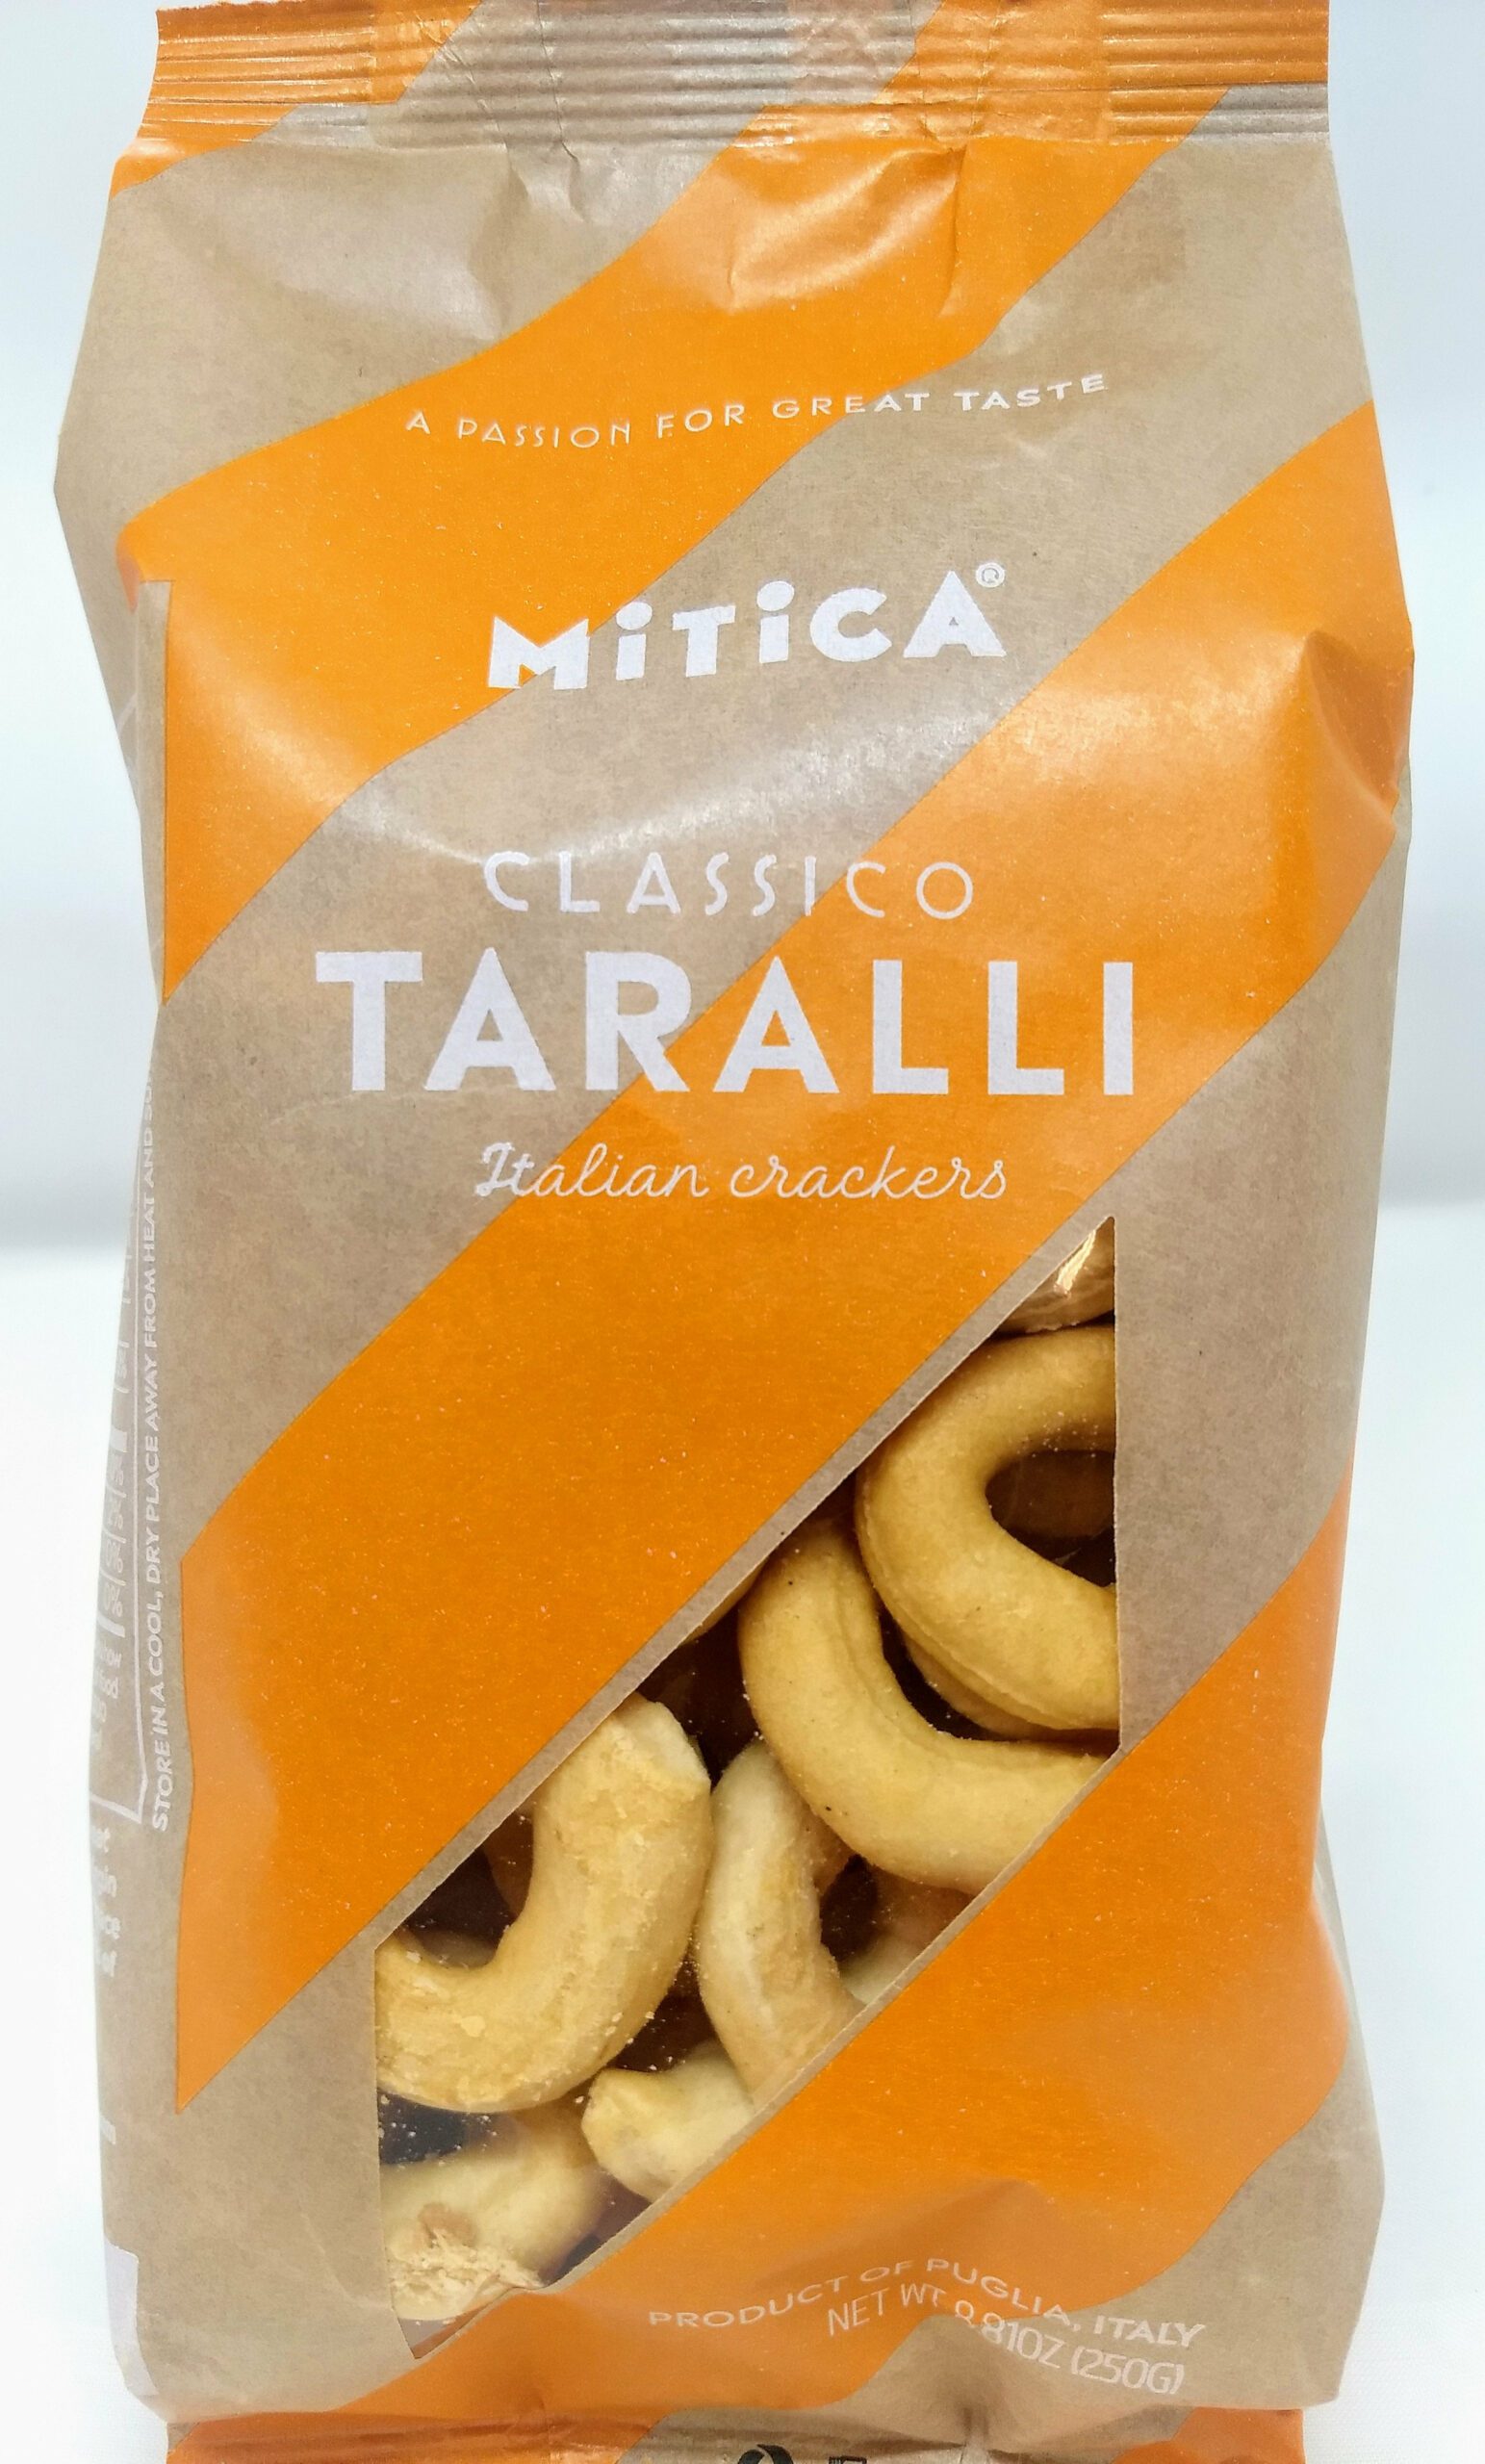 Taralli Classic Italian crackers 1 scaled